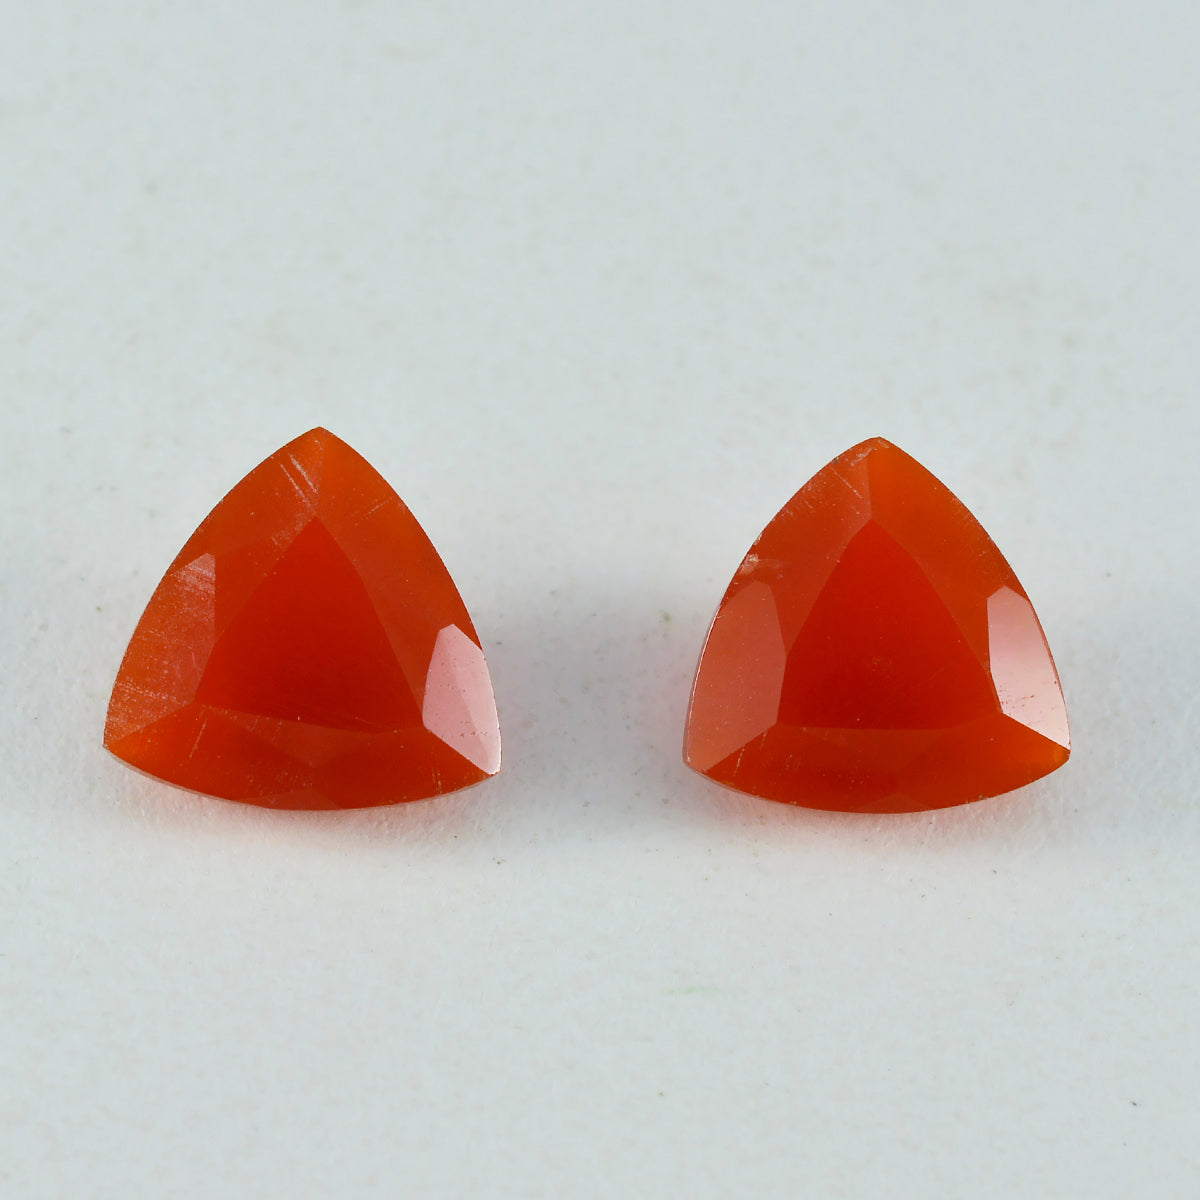 Riyogems 1PC Natural Red Onyx Faceted 9x9 mm Trillion Shape sweet Quality Gemstone